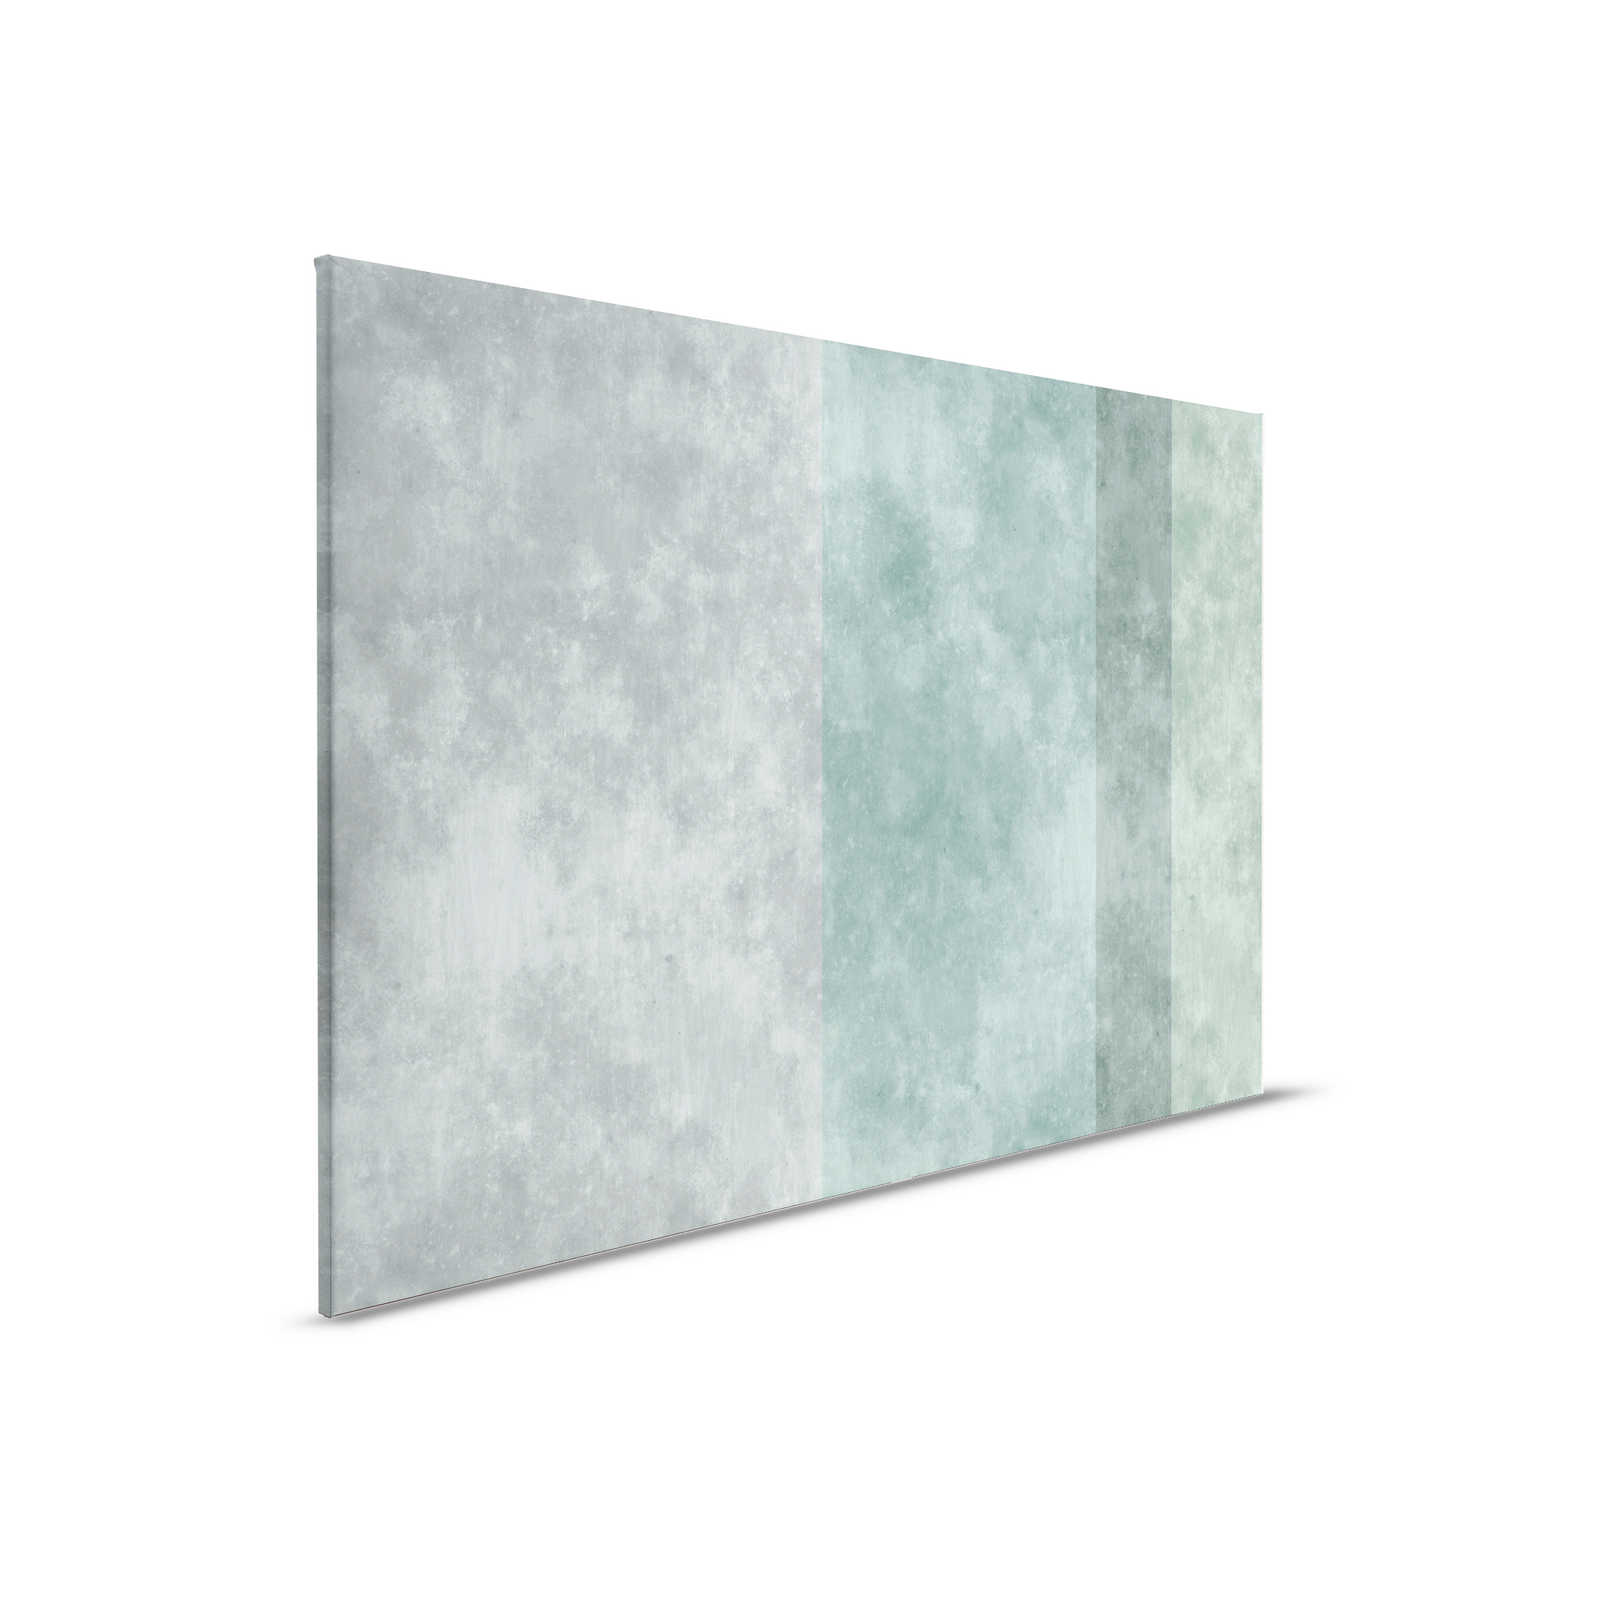 Concrete-look canvas picture with stripes | grey, blue - 0.90 m x 0.60 m
